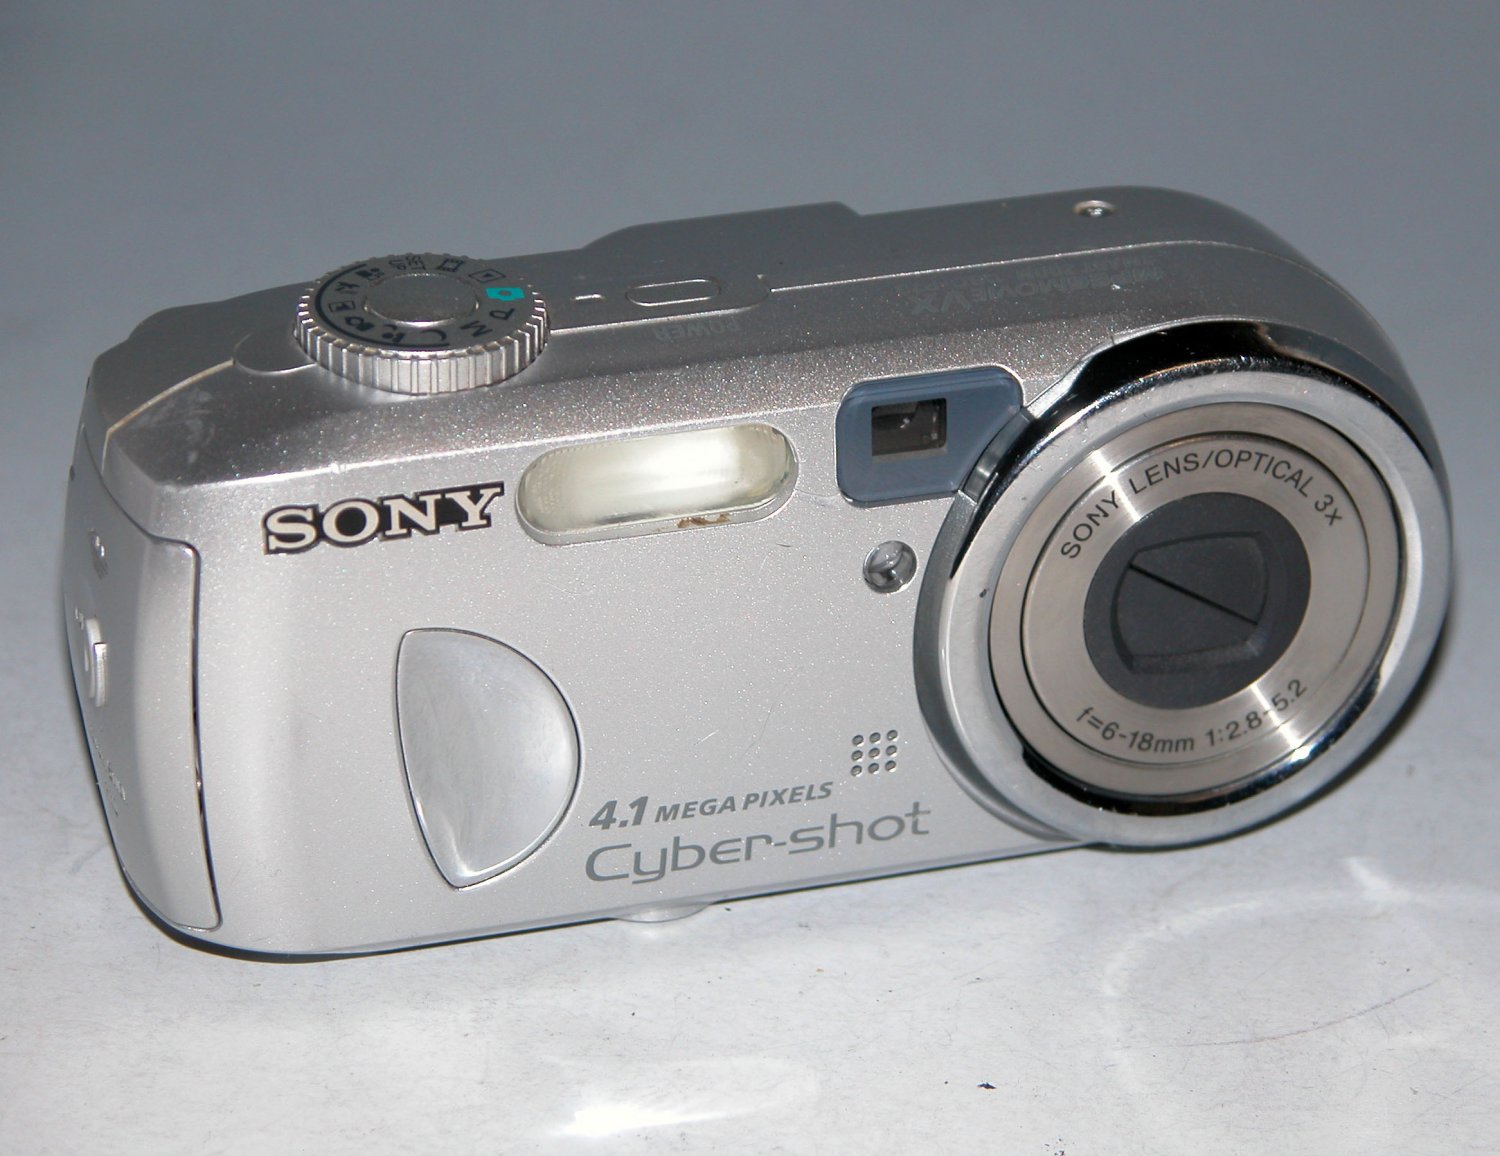 Sony Cyber-shot DSC-P73 4.1MP Digital Camera - Silver #5298